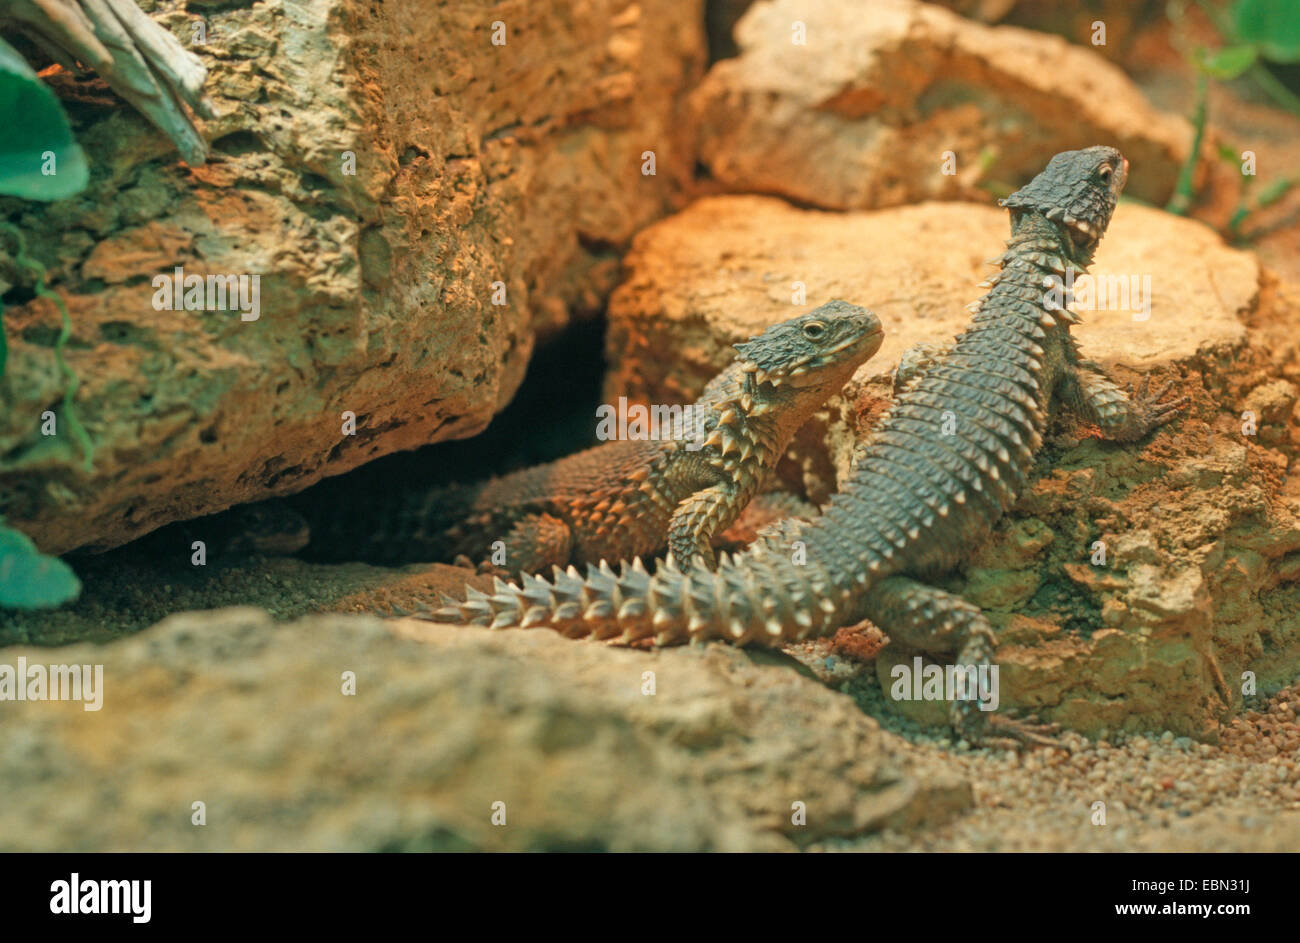 sungazer, giant girdled lizard, giant zonure, giant spinytail lizard (Cordylus giganteus), two reptiles sitting together among stones Stock Photo